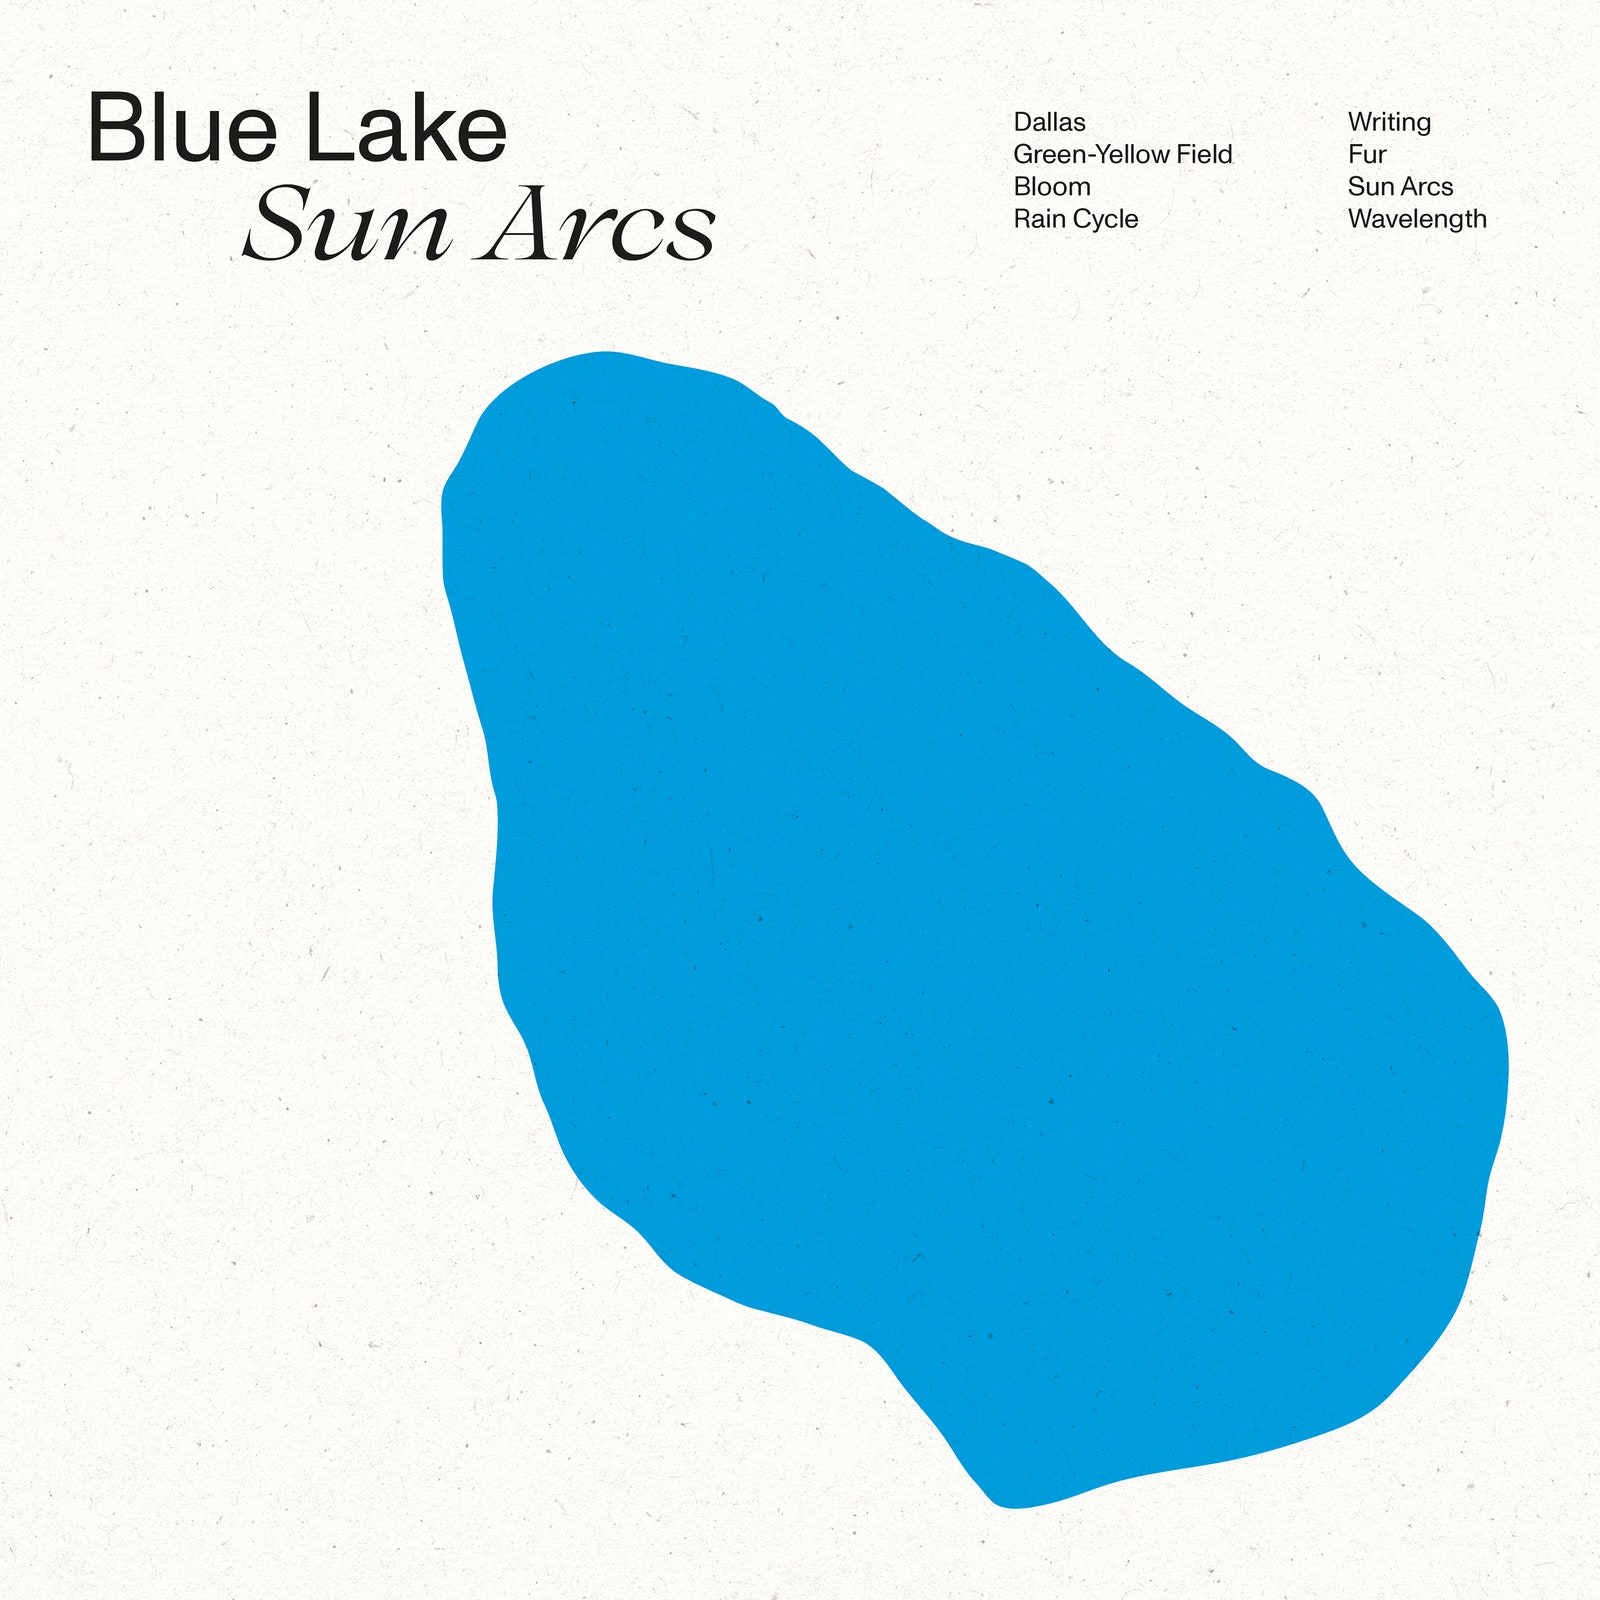 Blue Lake Sun Arcs